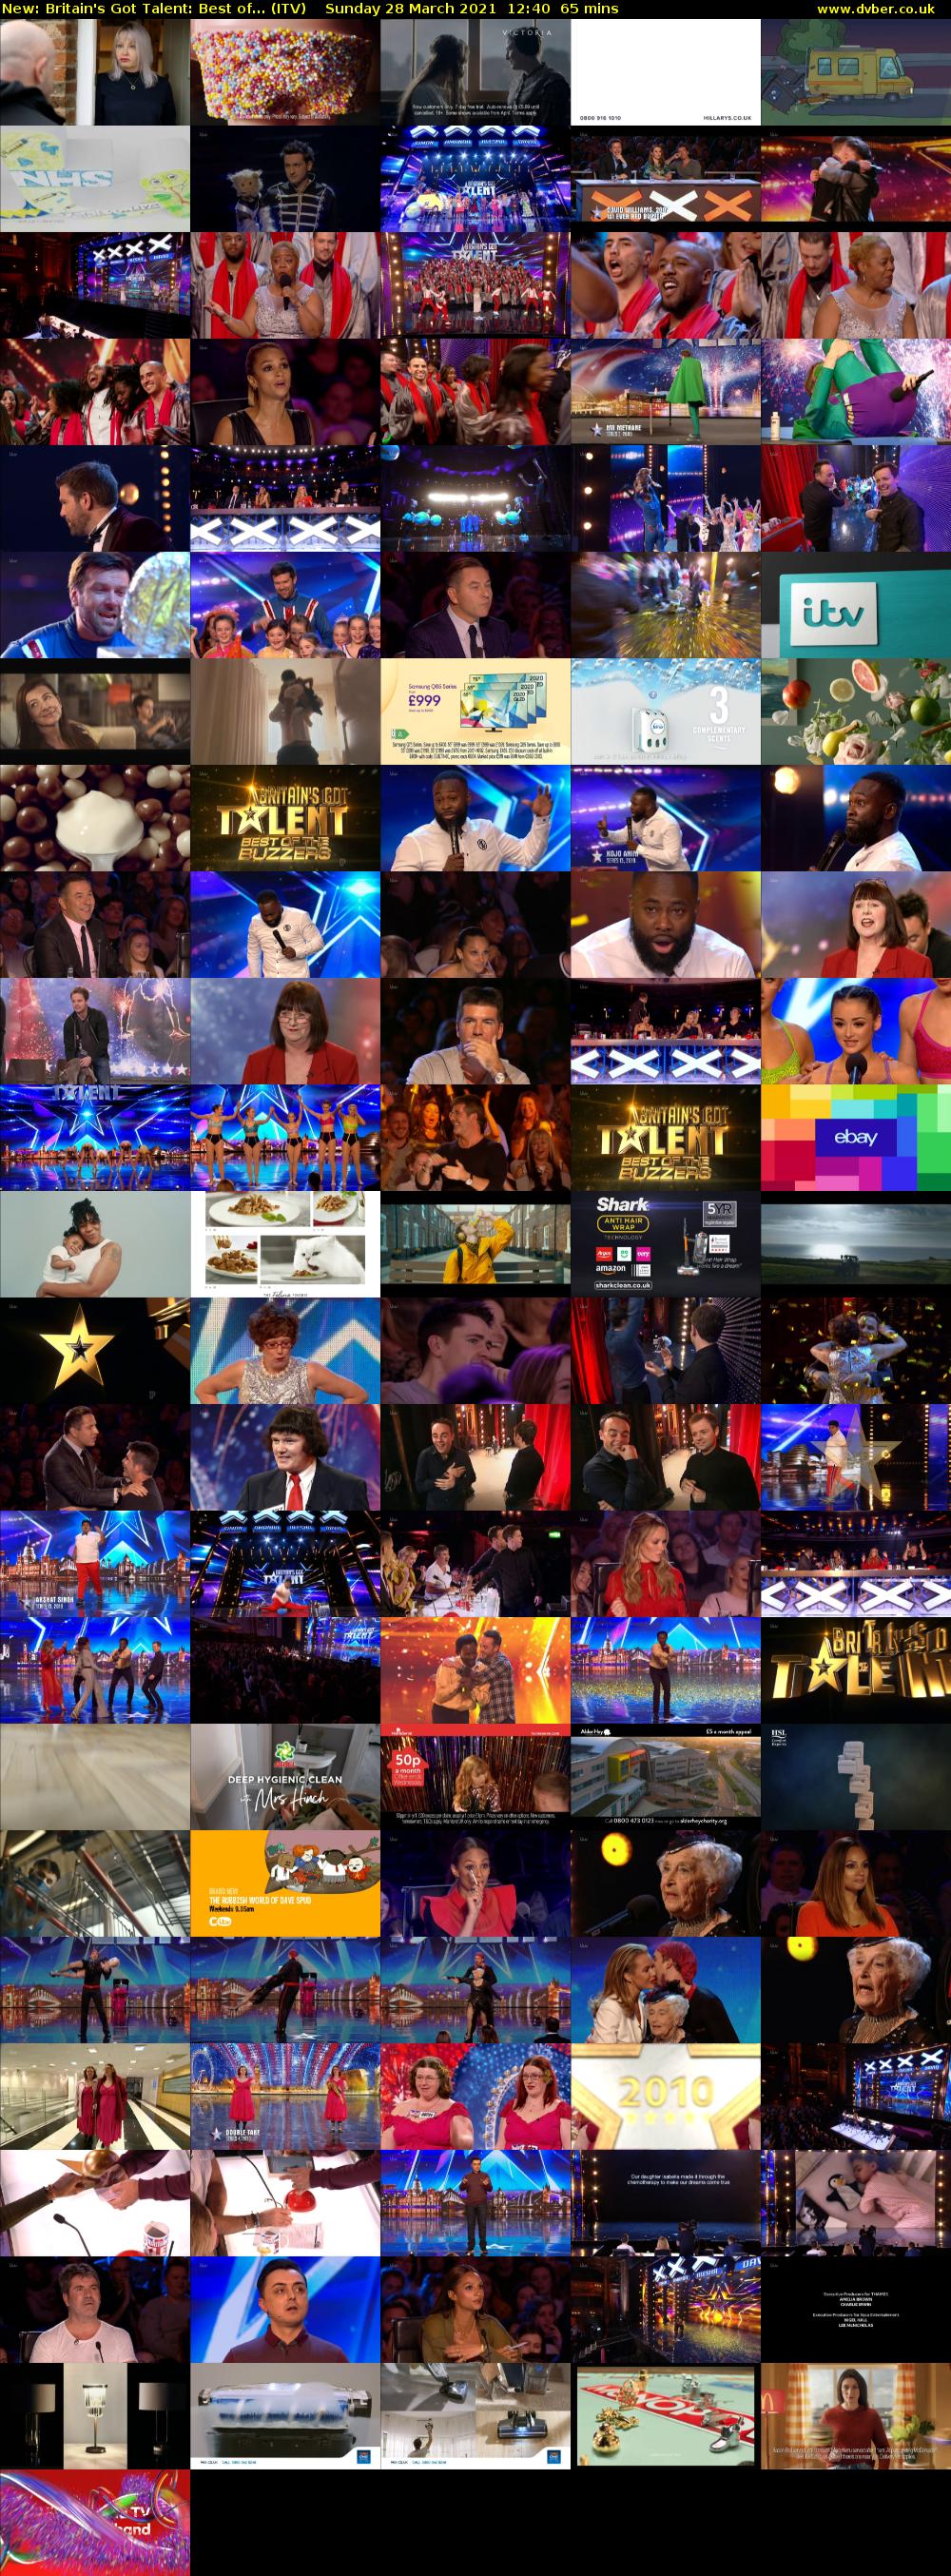 Britain's Got Talent: Best of... (ITV) Sunday 28 March 2021 12:40 - 13:45